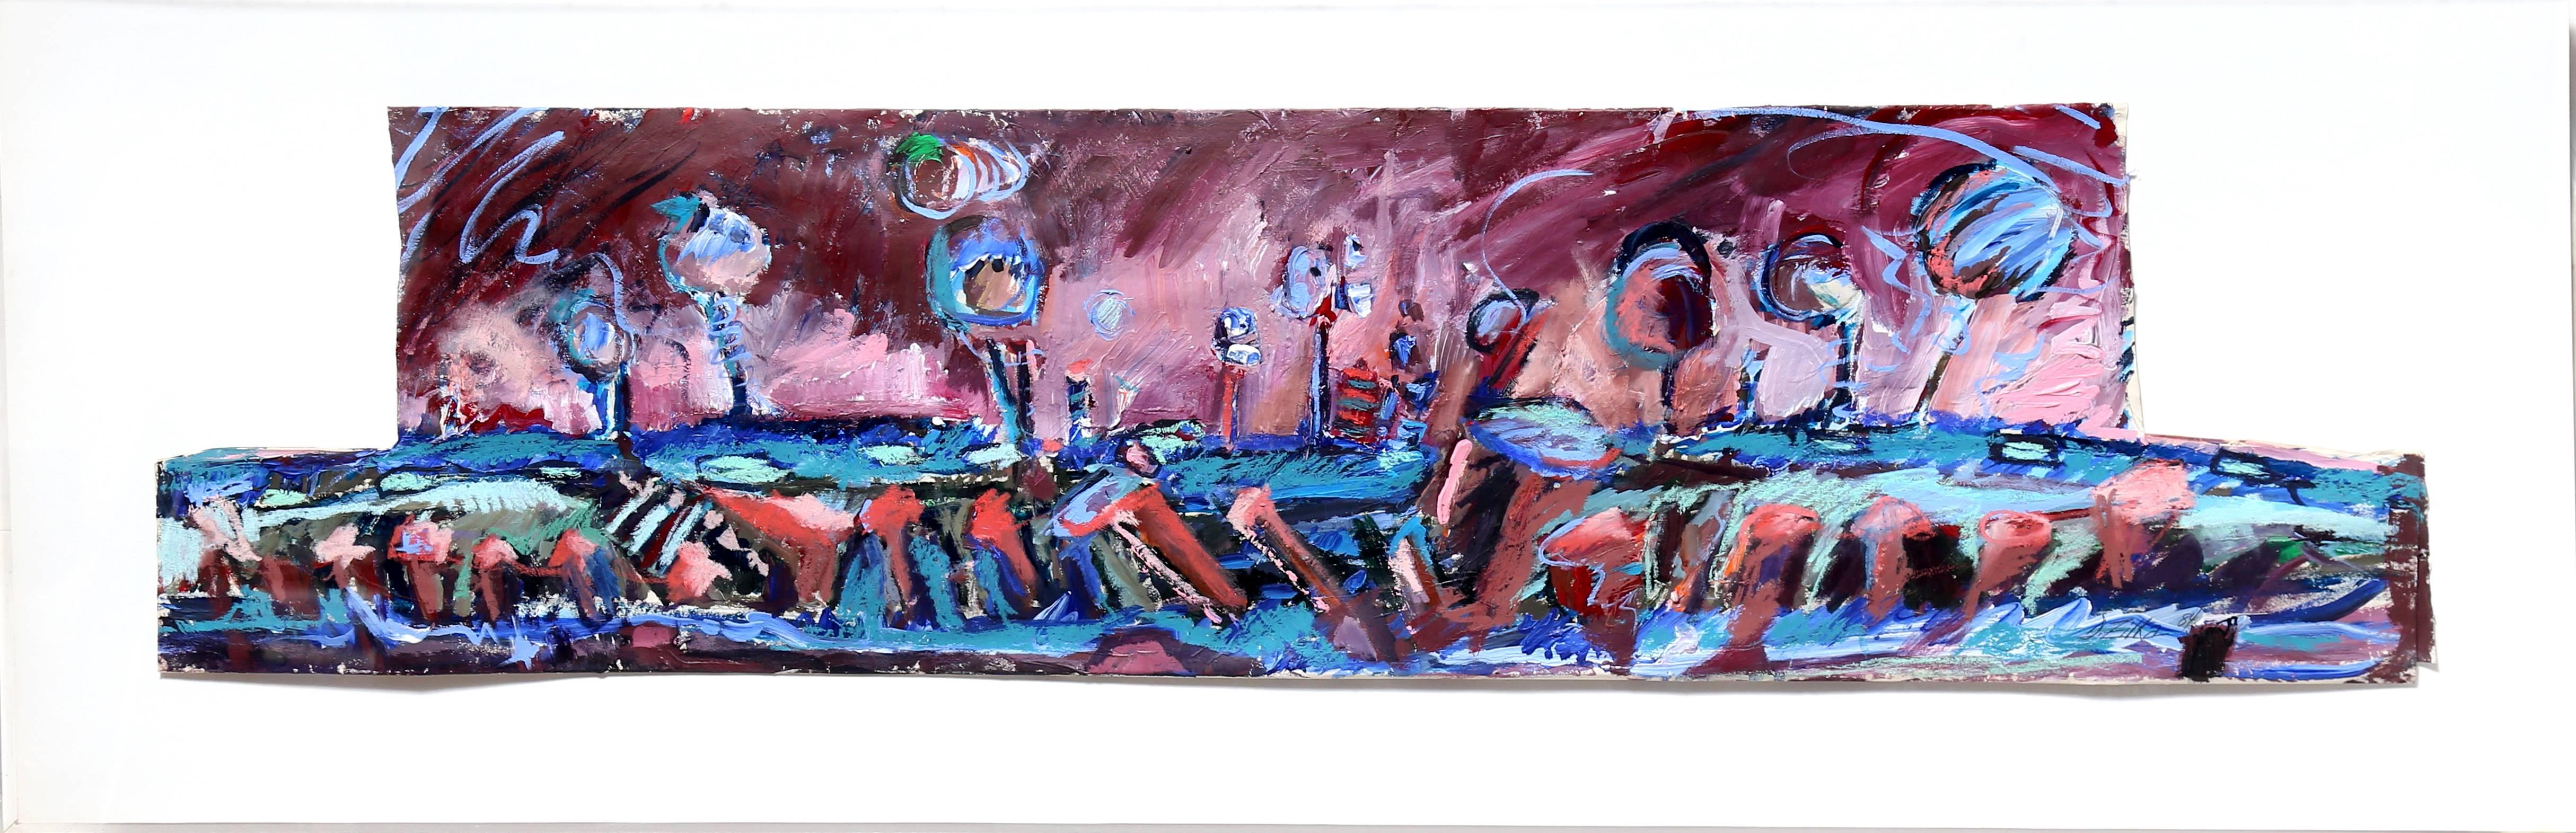 Künstlerin: Dorothy Zilka, Amerikanerin
Titel: Ariadne
Jahr: 1984
Medium:	Acryl auf Karton, signiert v.l.n.r.
Größe: 12 x 48 Zoll (30,48 x 121,92 cm)
Rahmengröße: 19 x 54,5 Zoll